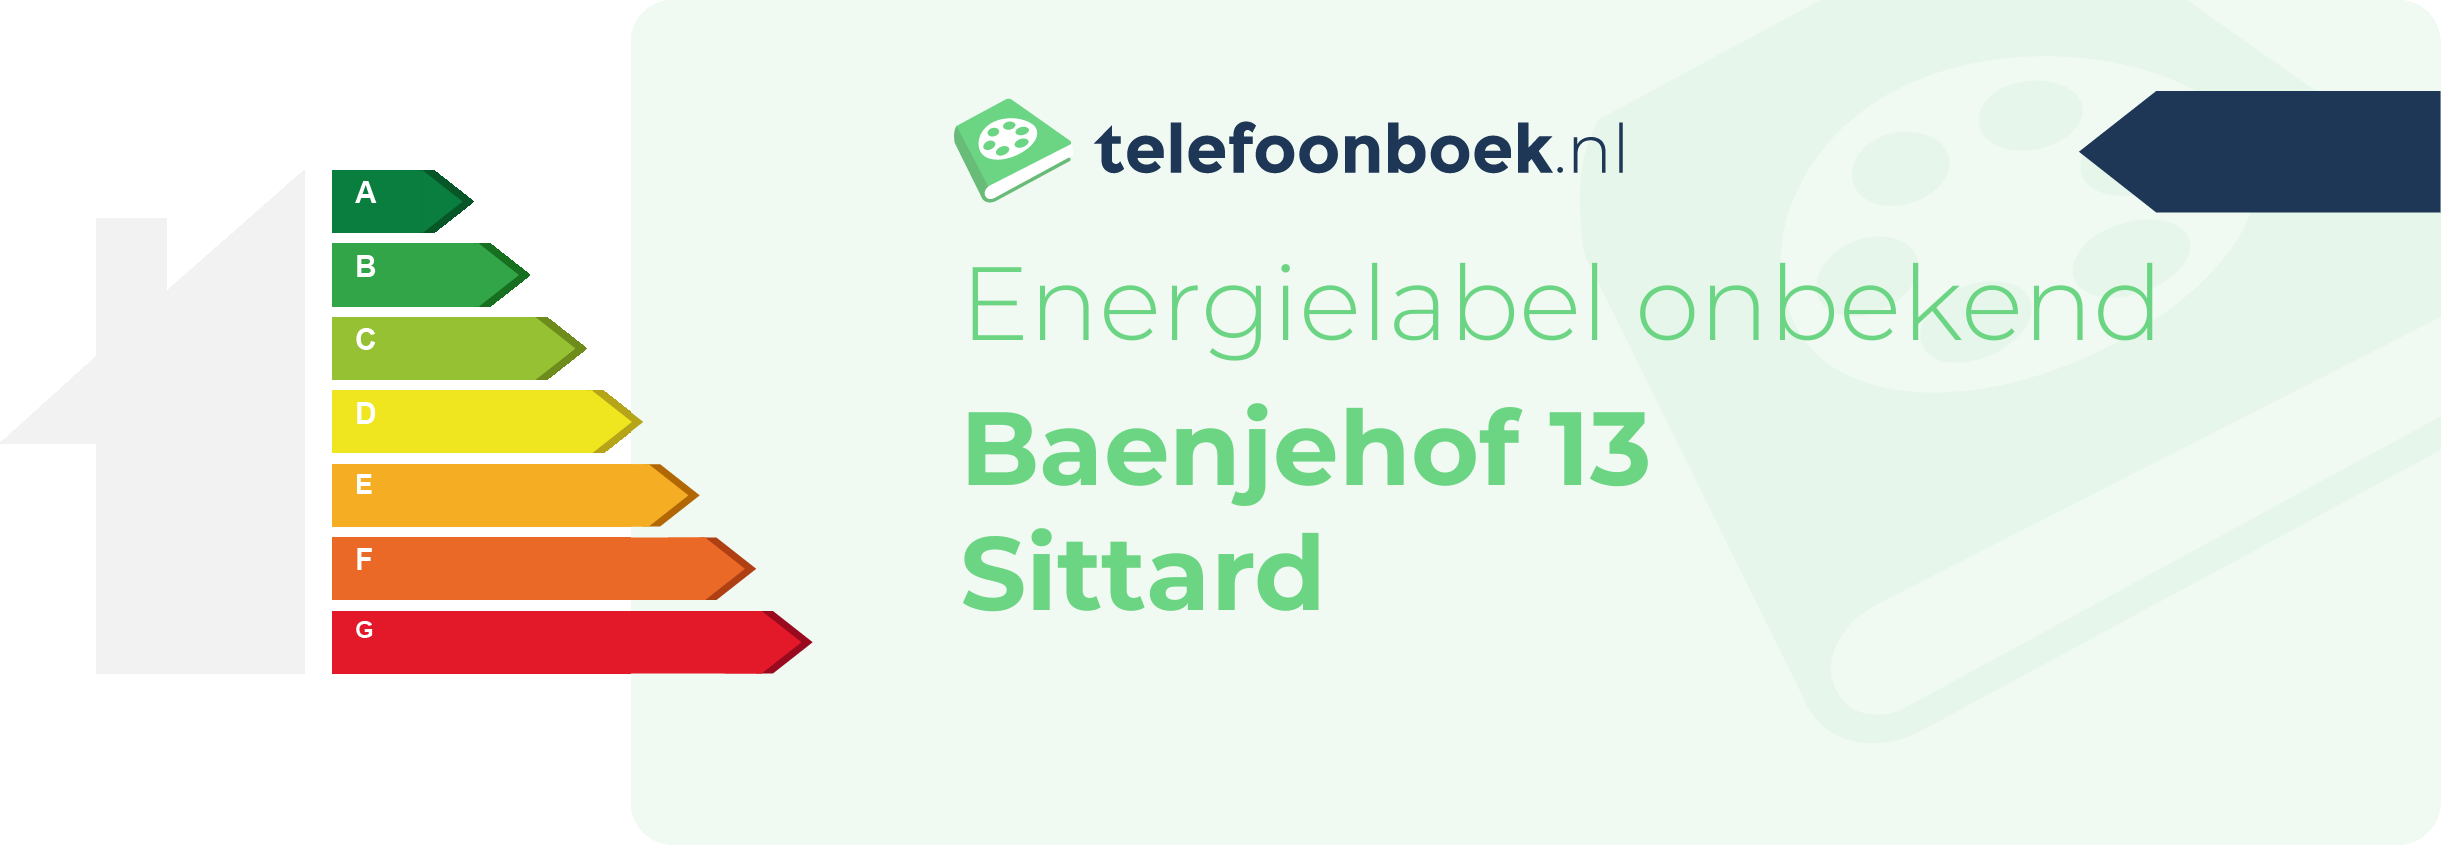 Energielabel Baenjehof 13 Sittard